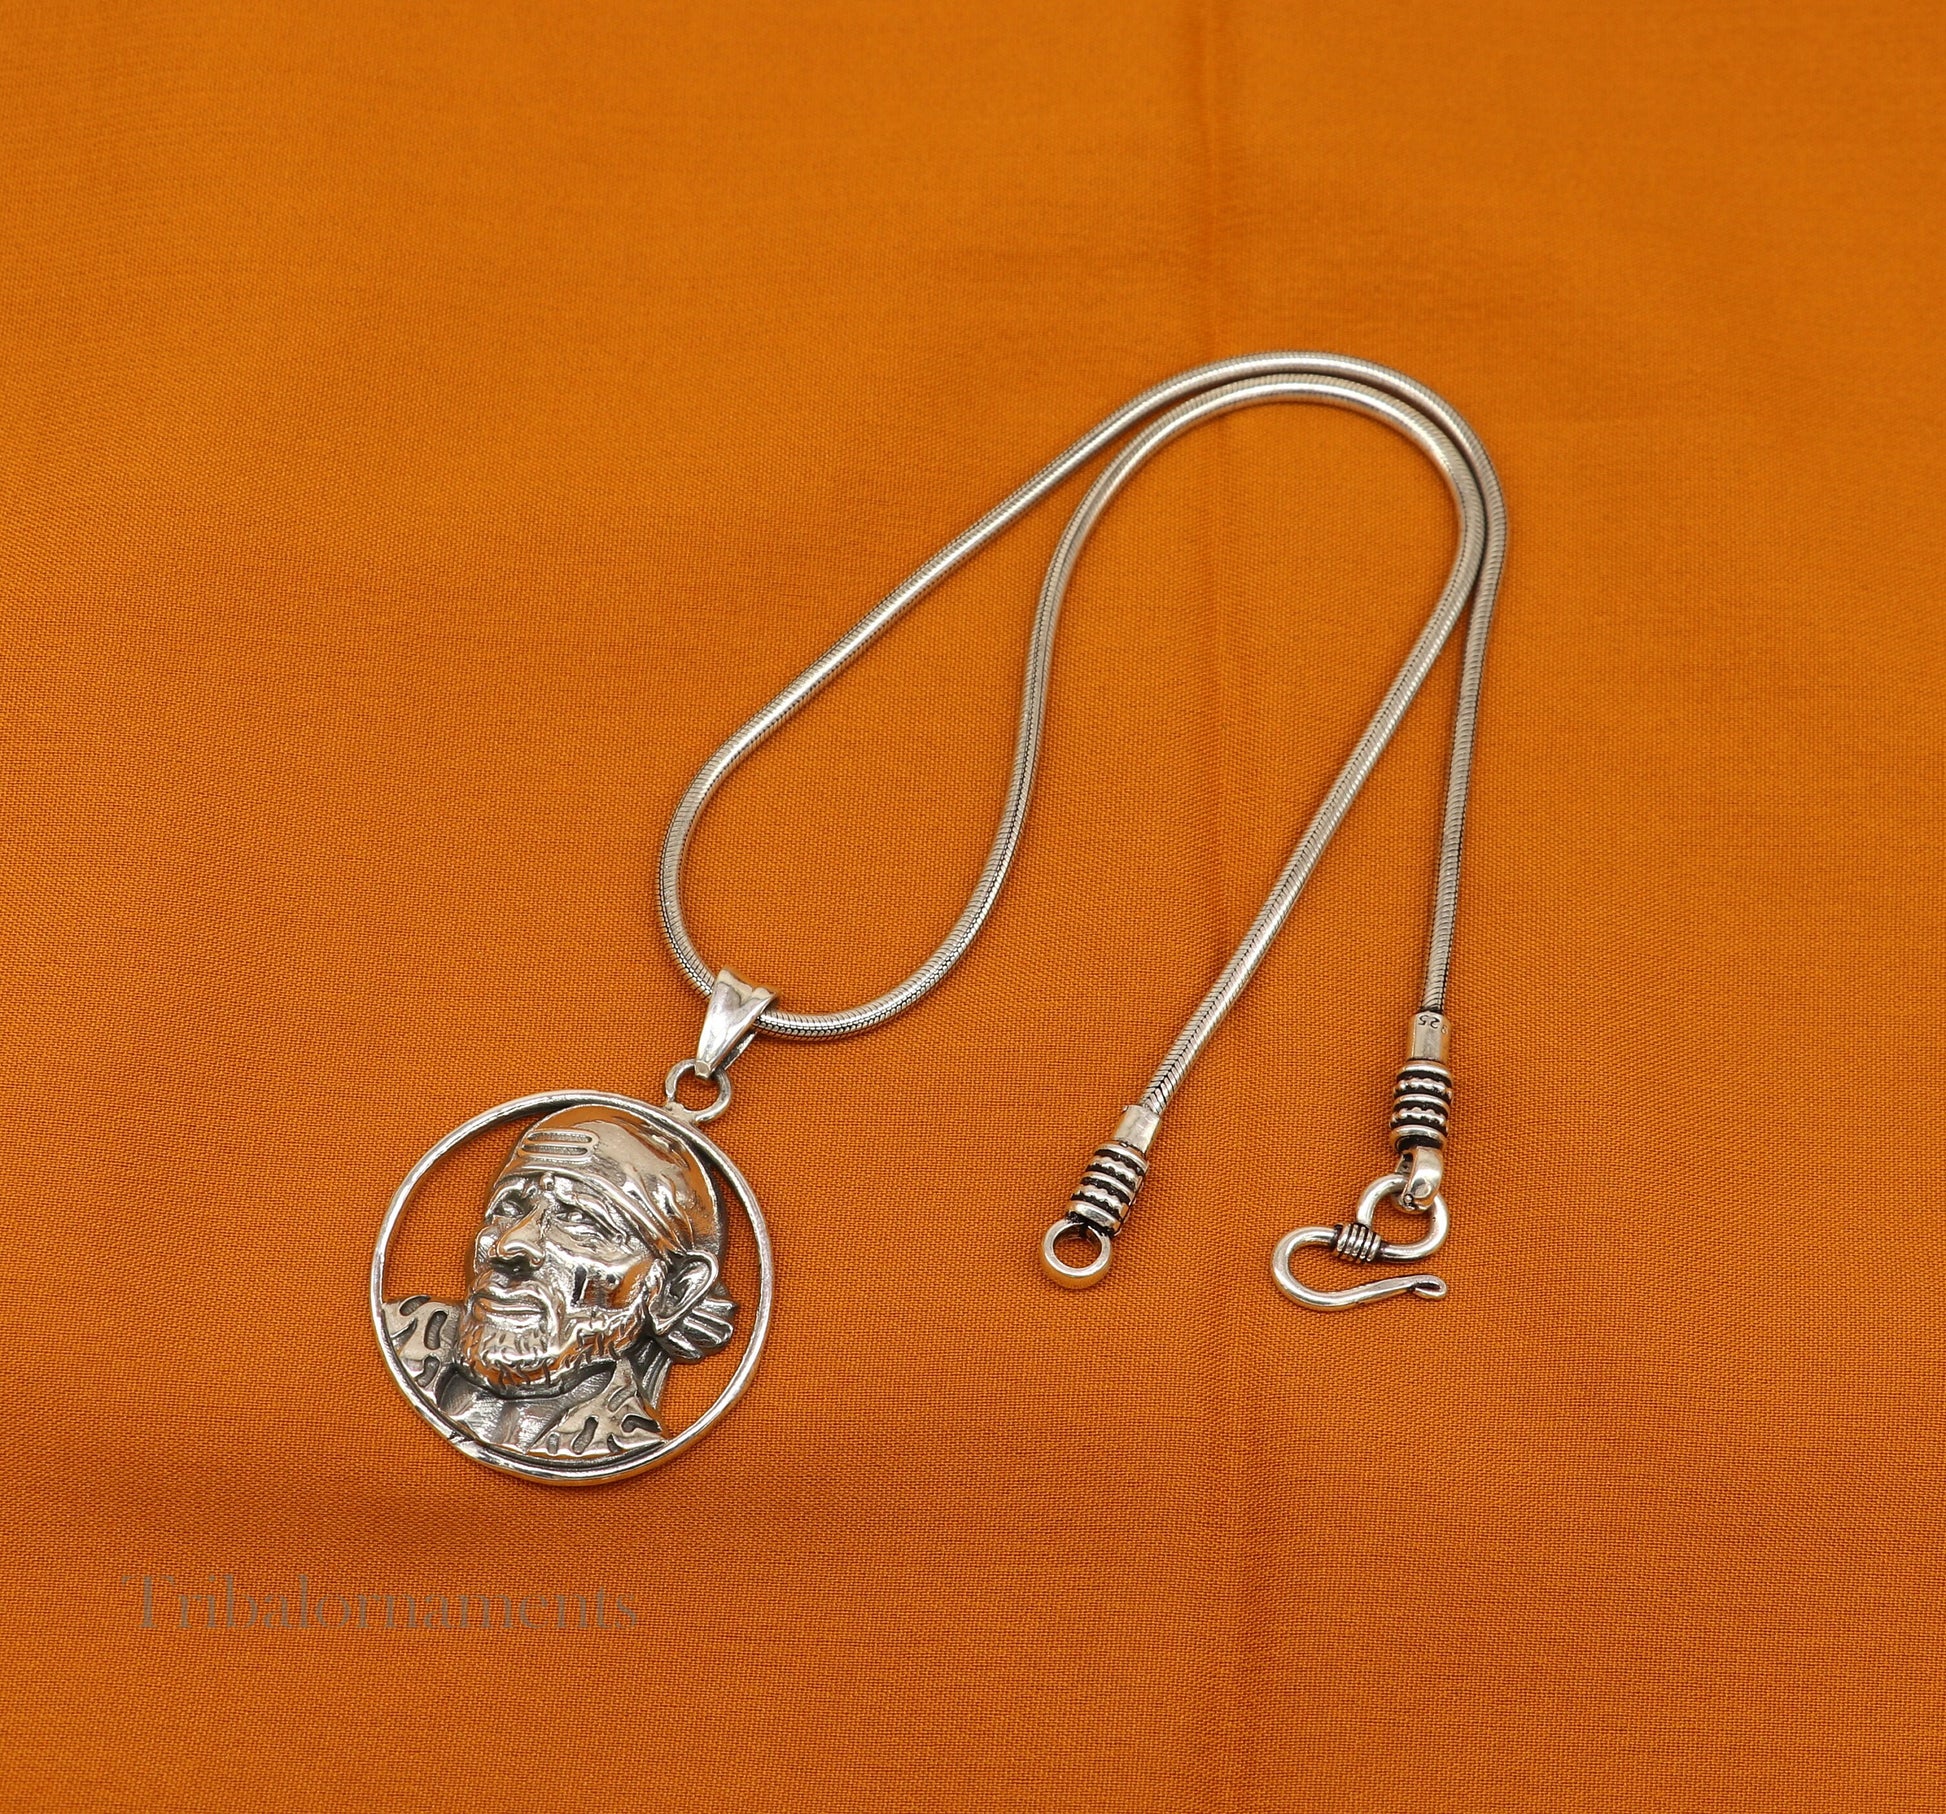 Iidol Sai Baba pendant 925 sterling silver handmade amazing stylish unisex pendant locket personalized jewelry tribal jewelry ssp945 - TRIBAL ORNAMENTS